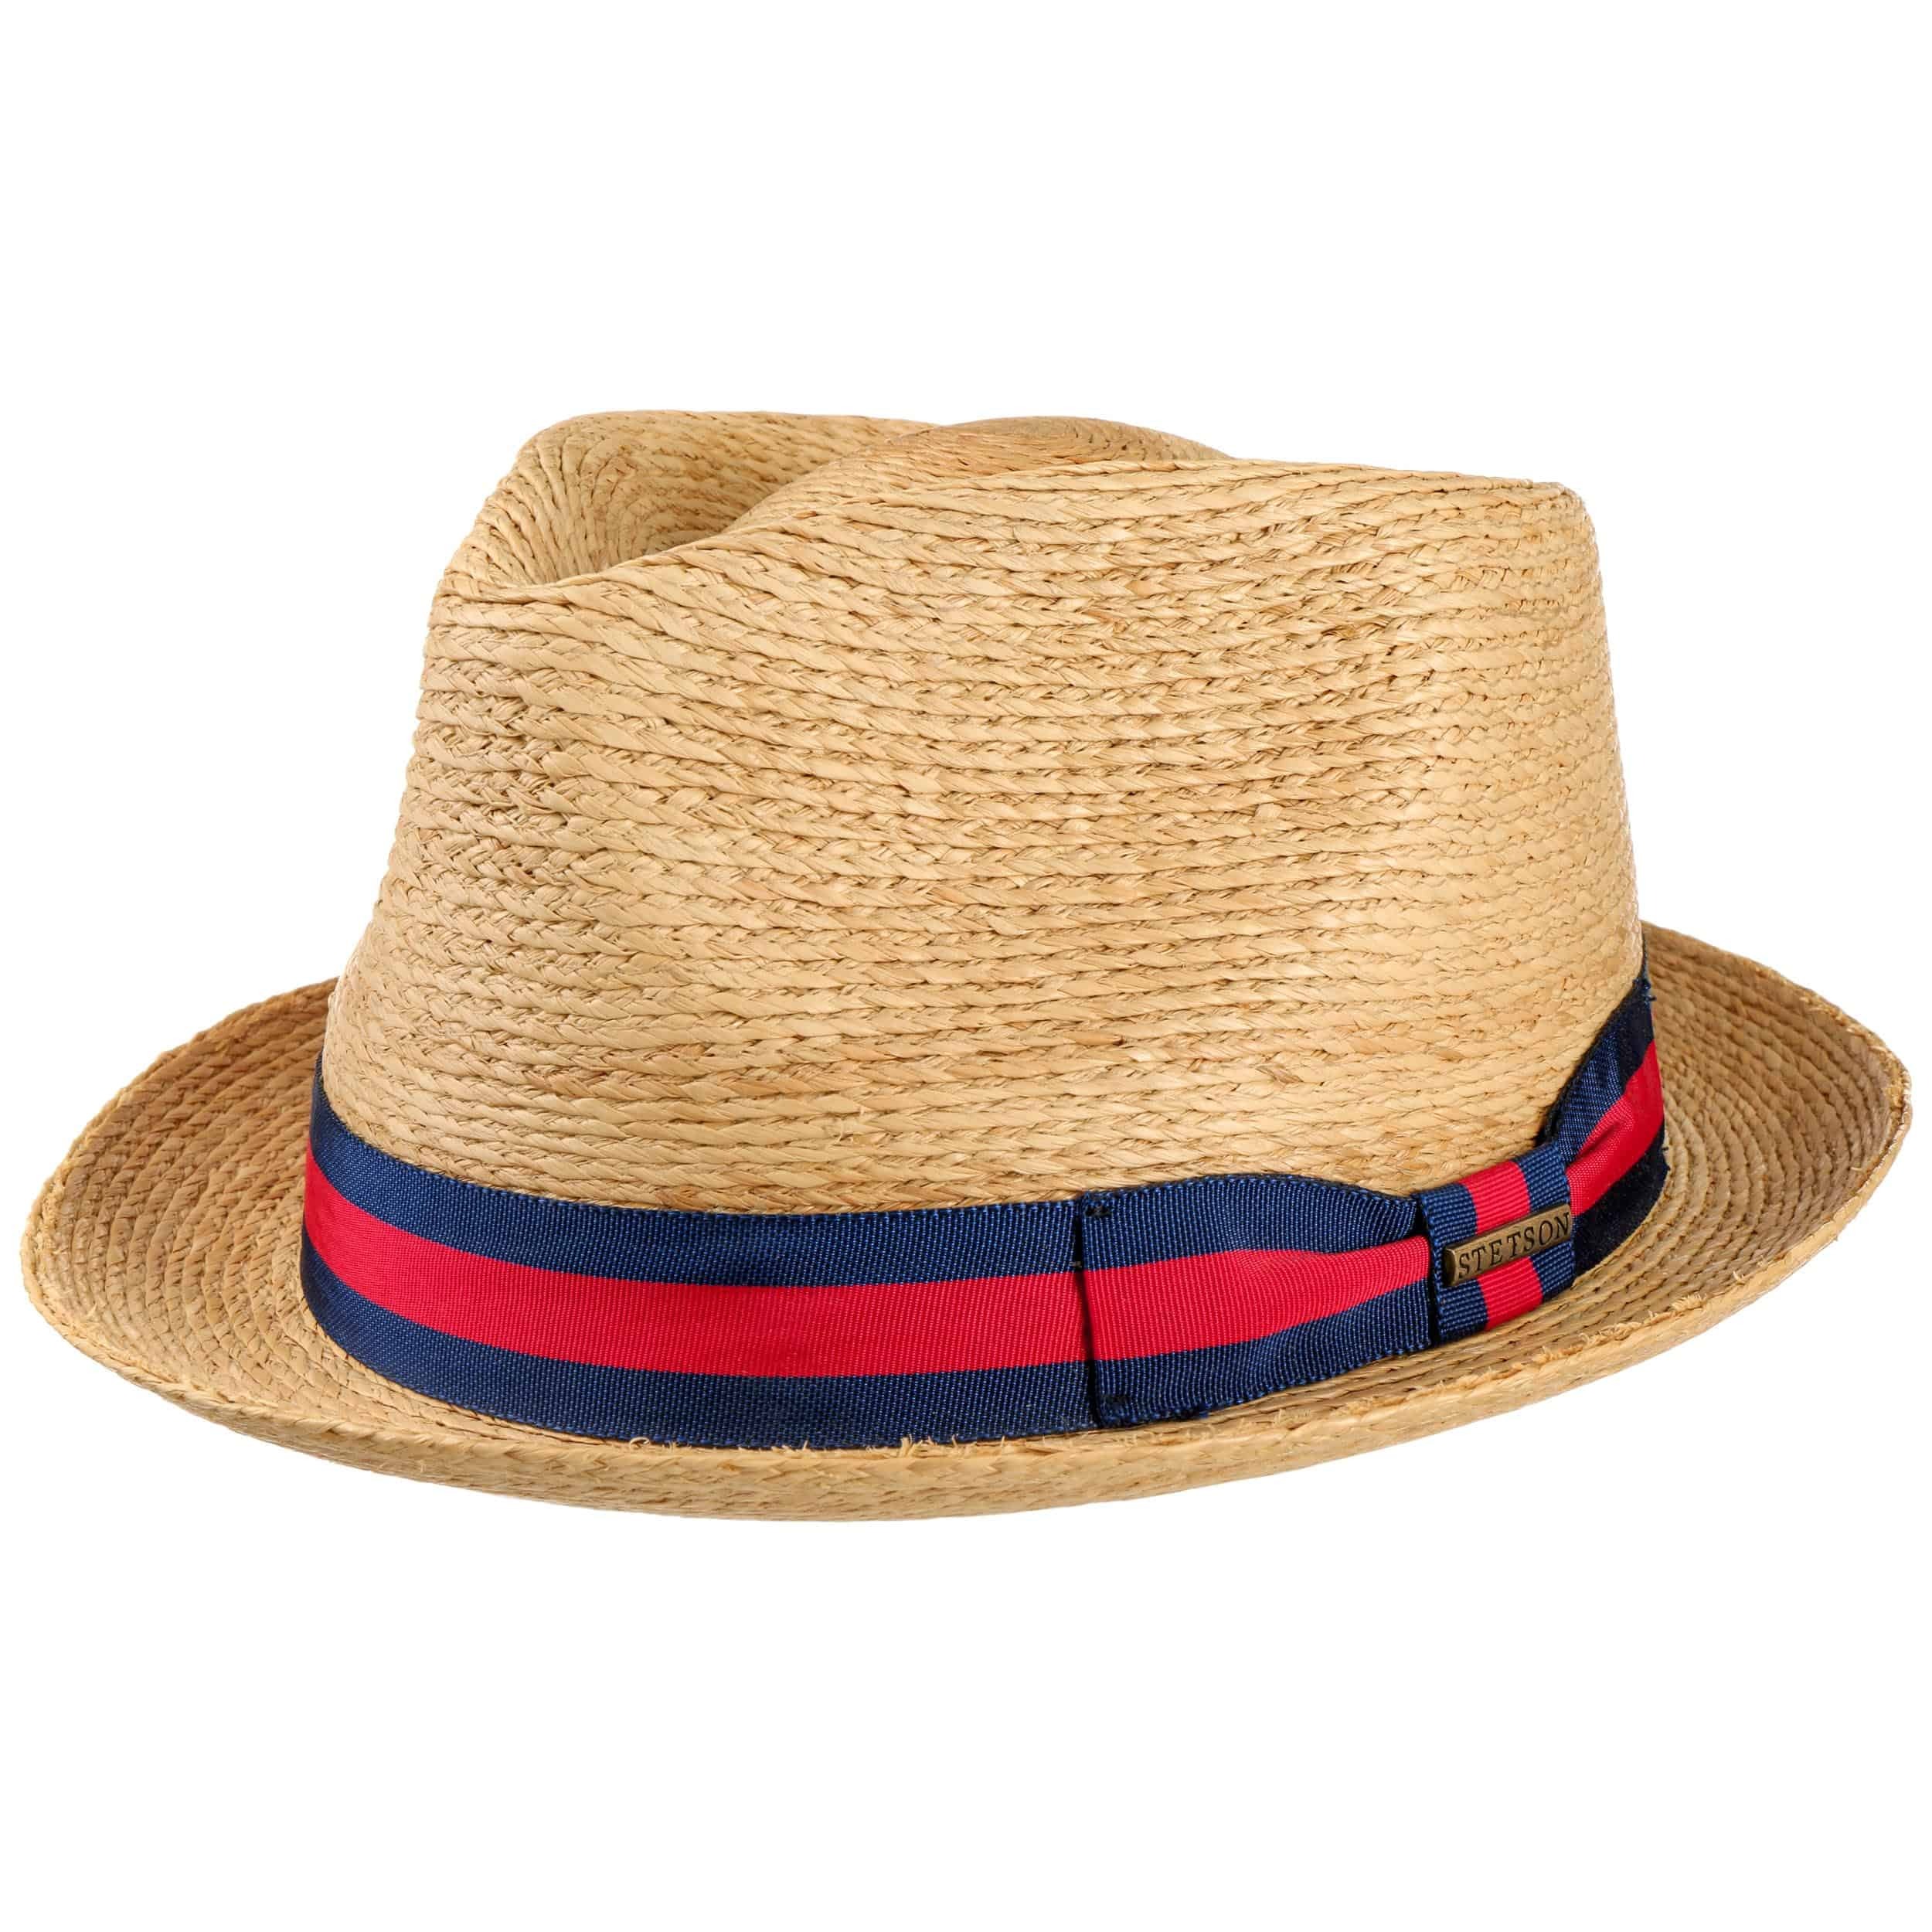 Hat play. Stetson. Соломенные мужские шляпы Стетсон. Фермерская шляпа. Европейская фермерская шляпа.